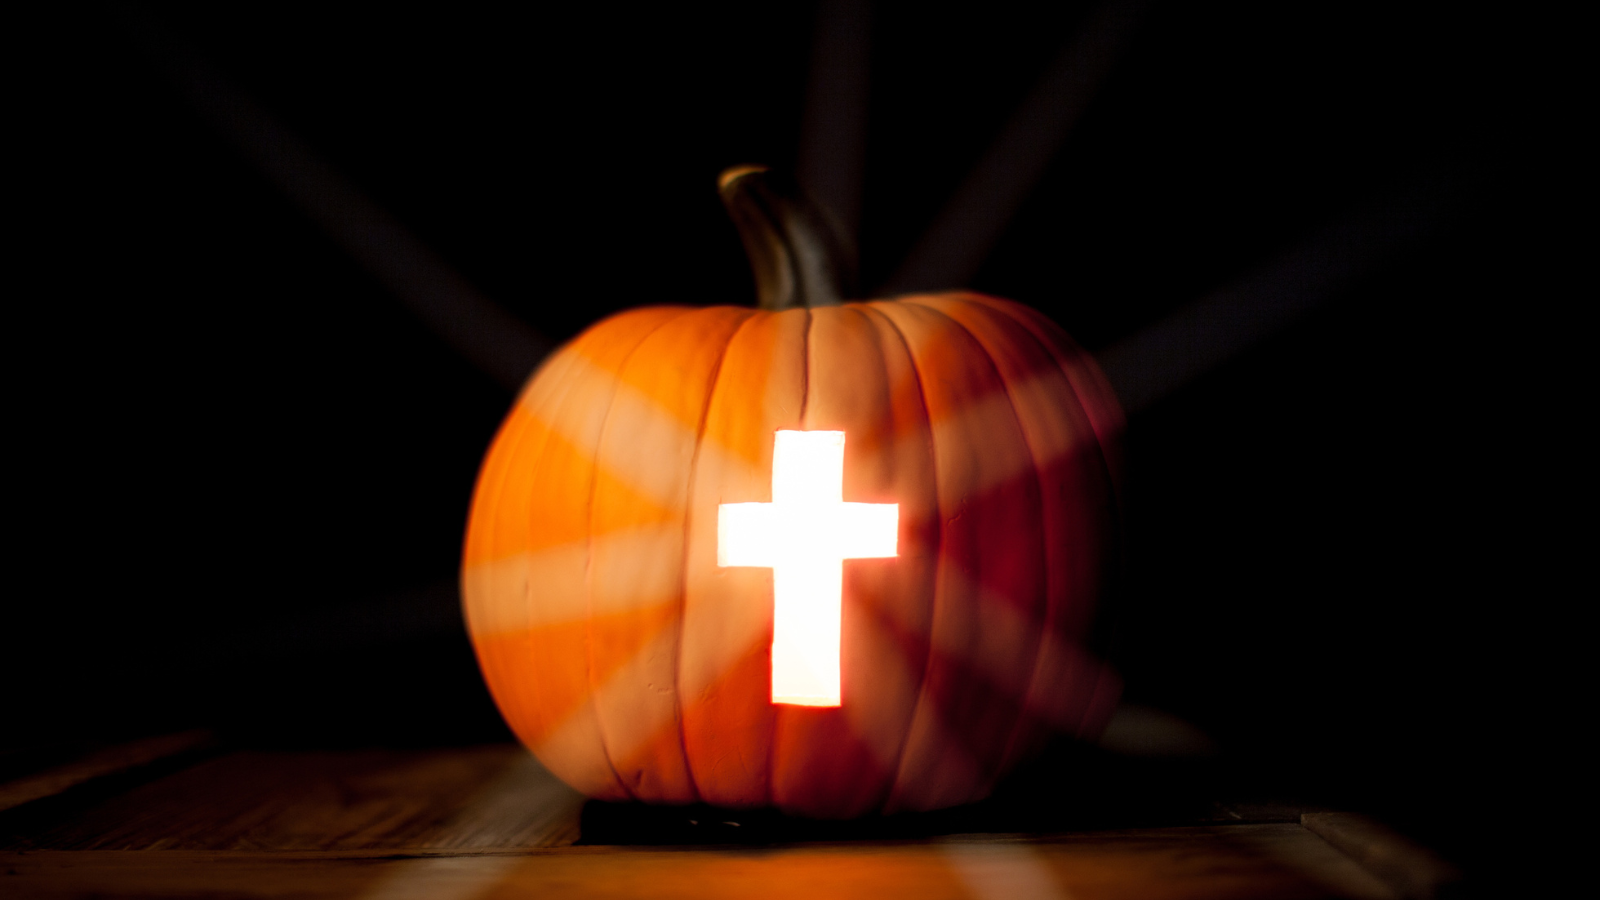 A cross carved into a lit up pumpkin.